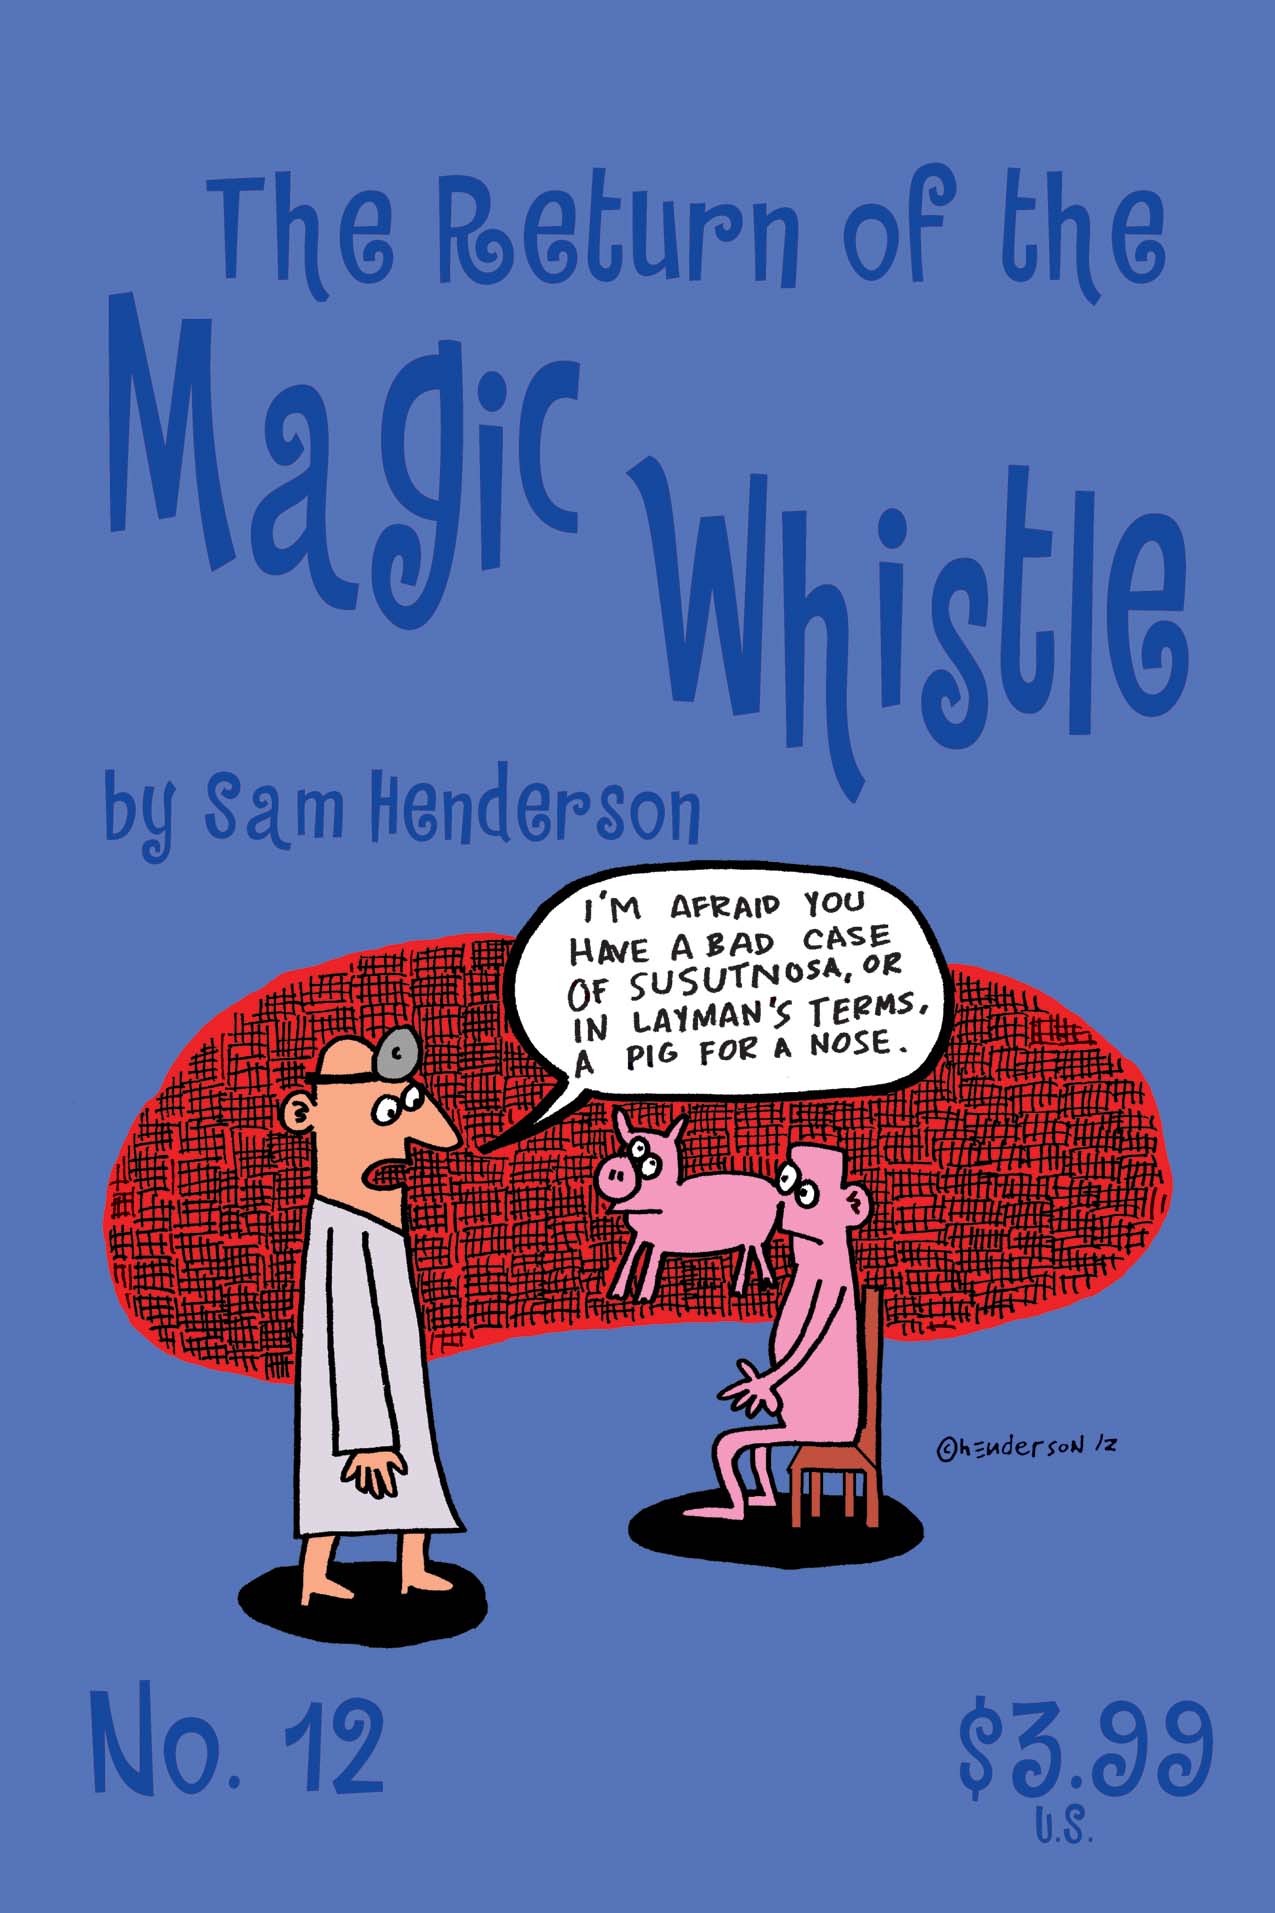 Magic Whistle #12